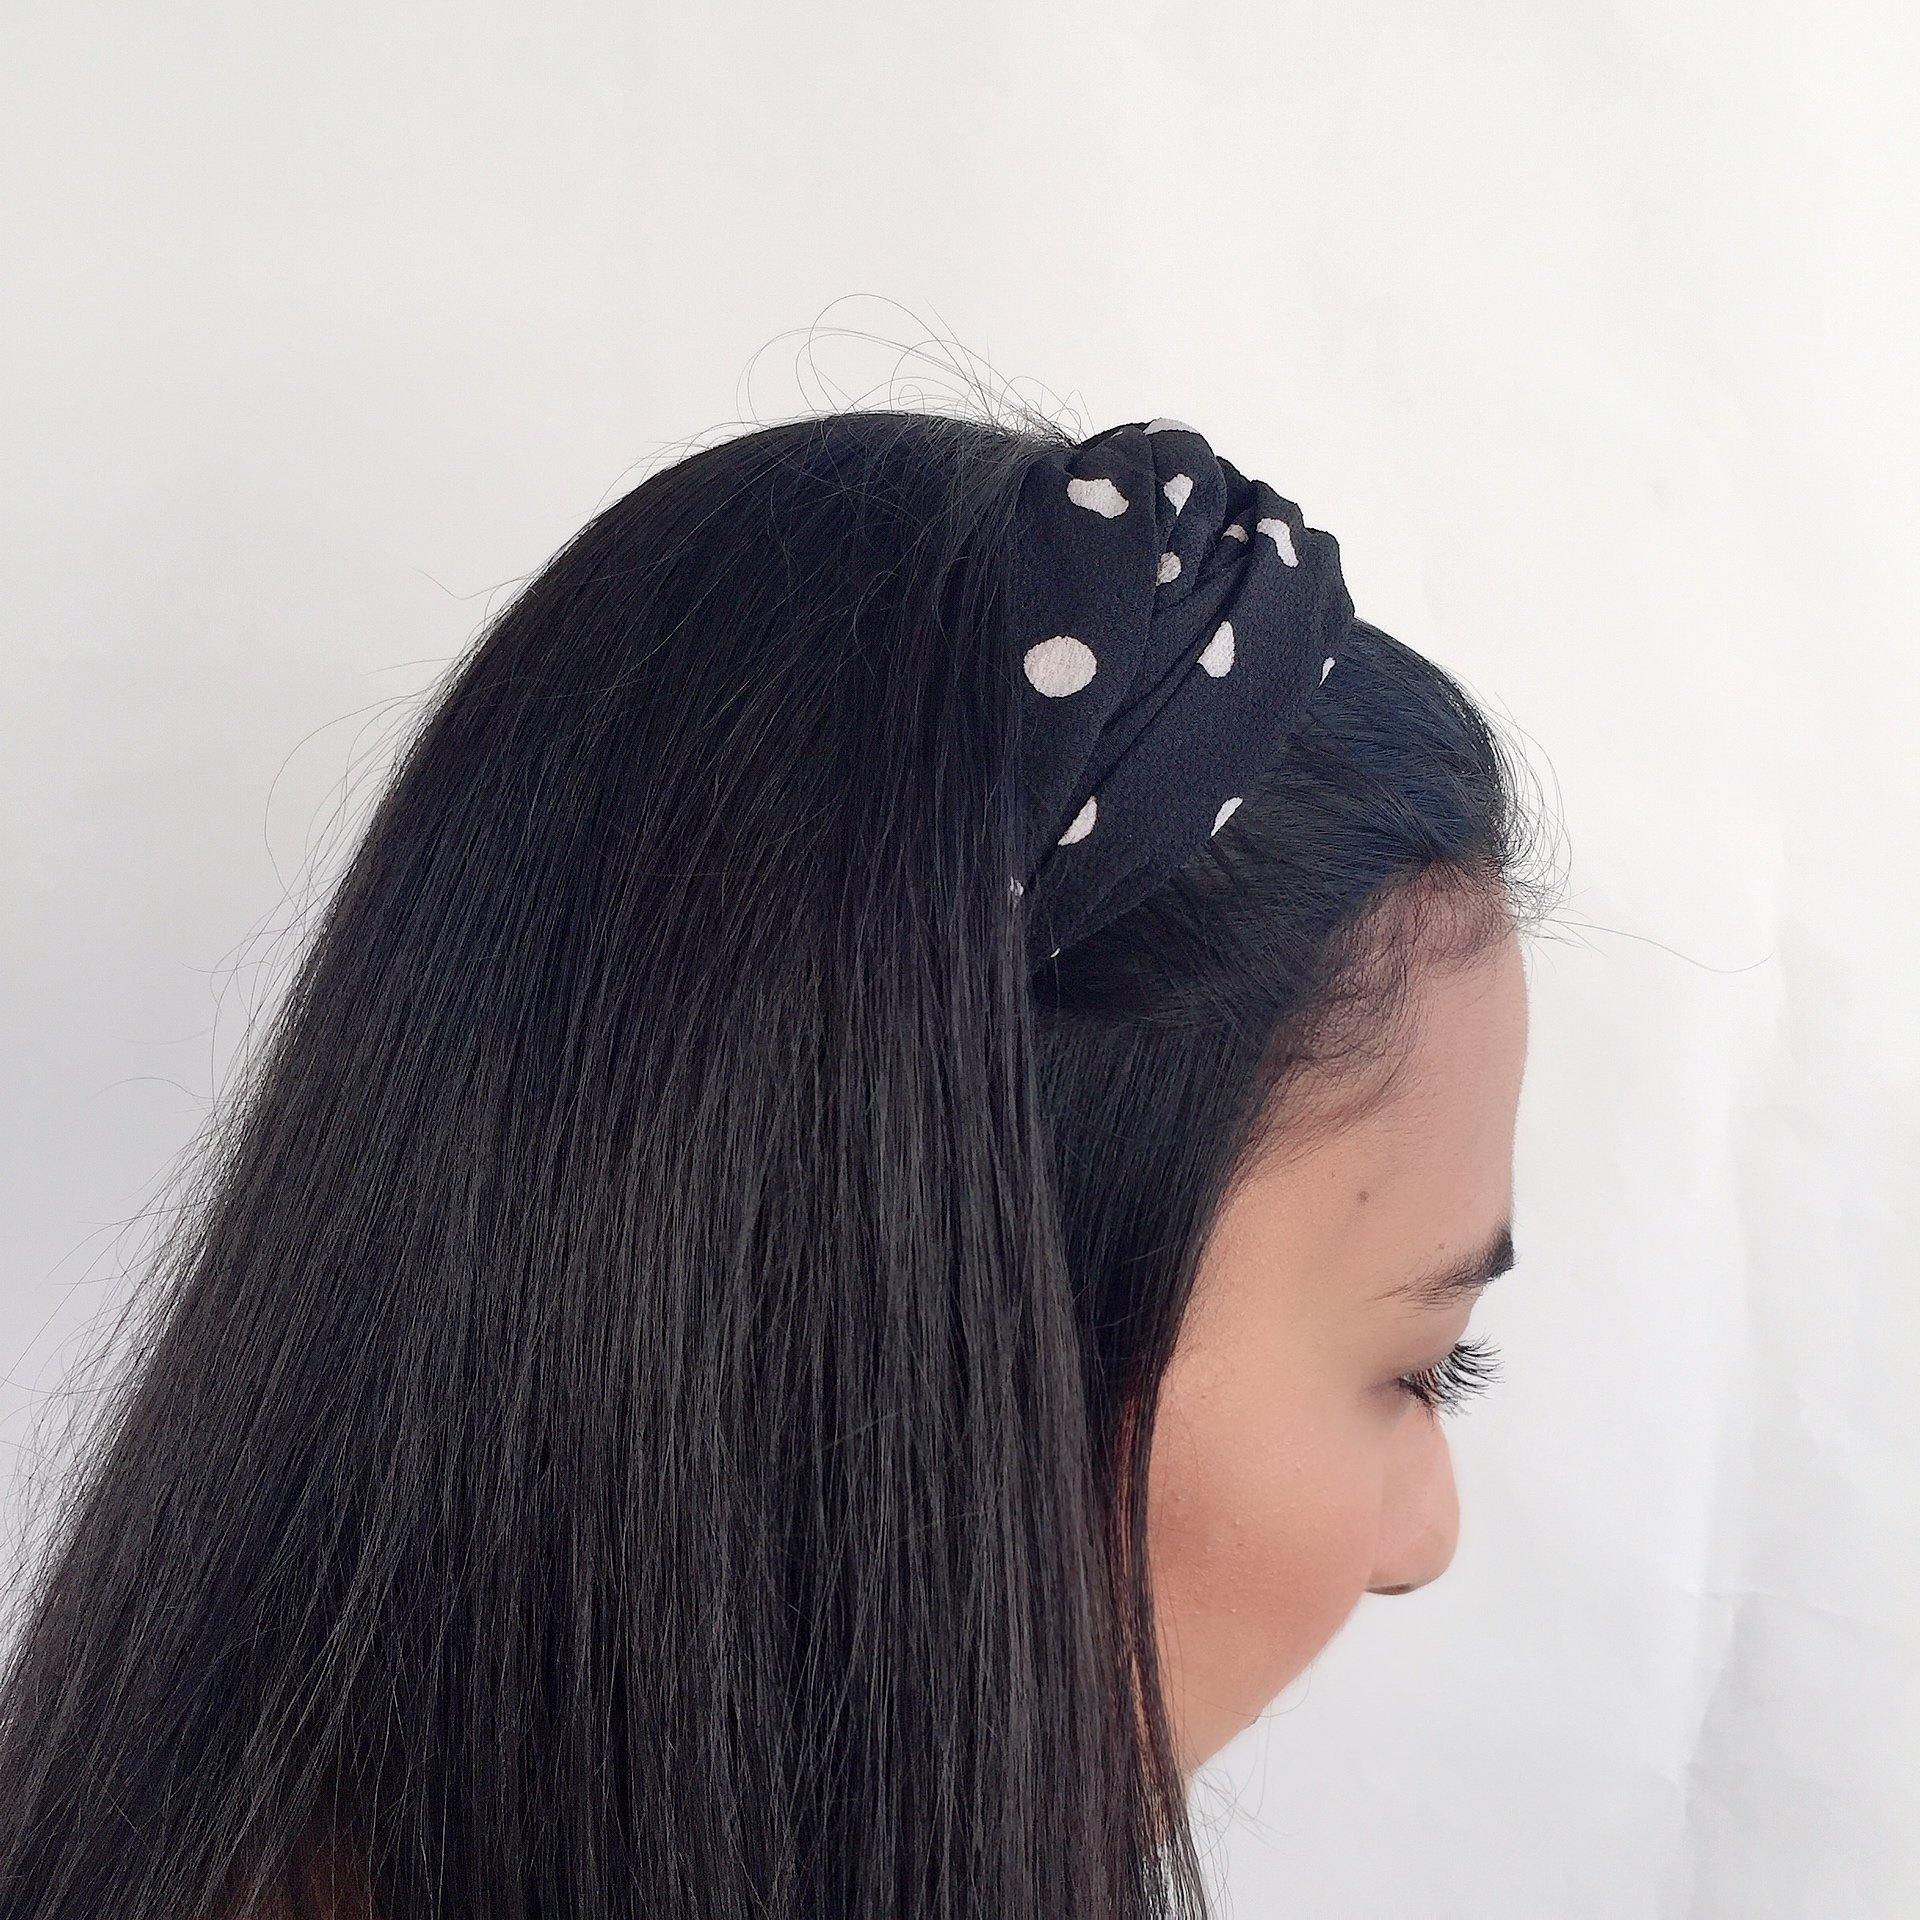 Black and white polka dot headband (not an Alice Band) - Zees Fashion